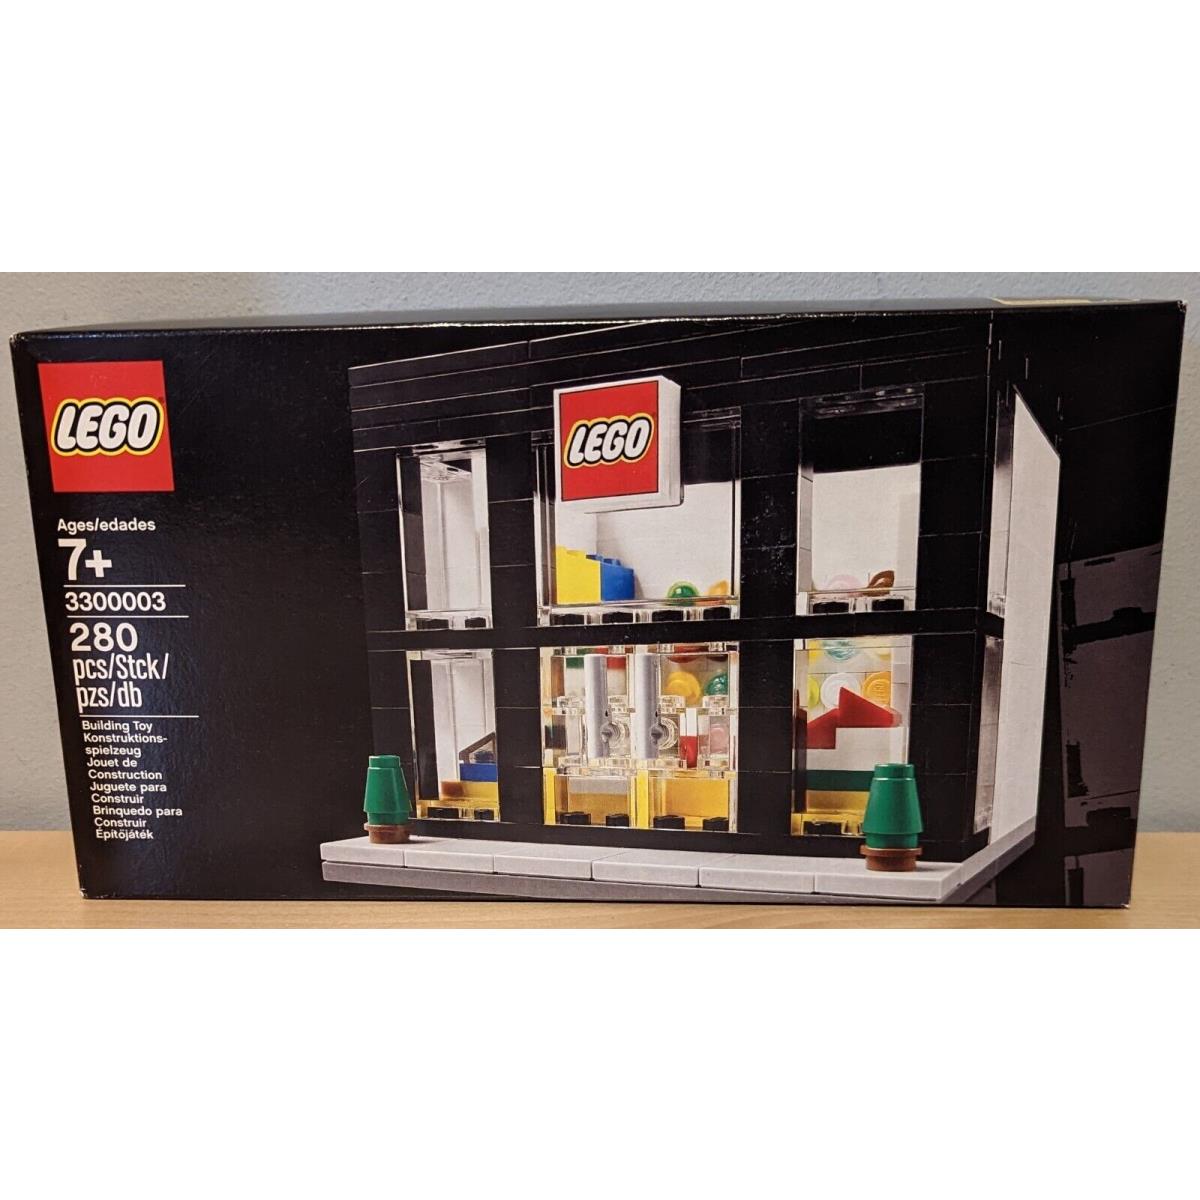 New/sealed/shelf Wear Lego Promotional Brand Retail Store 3300003